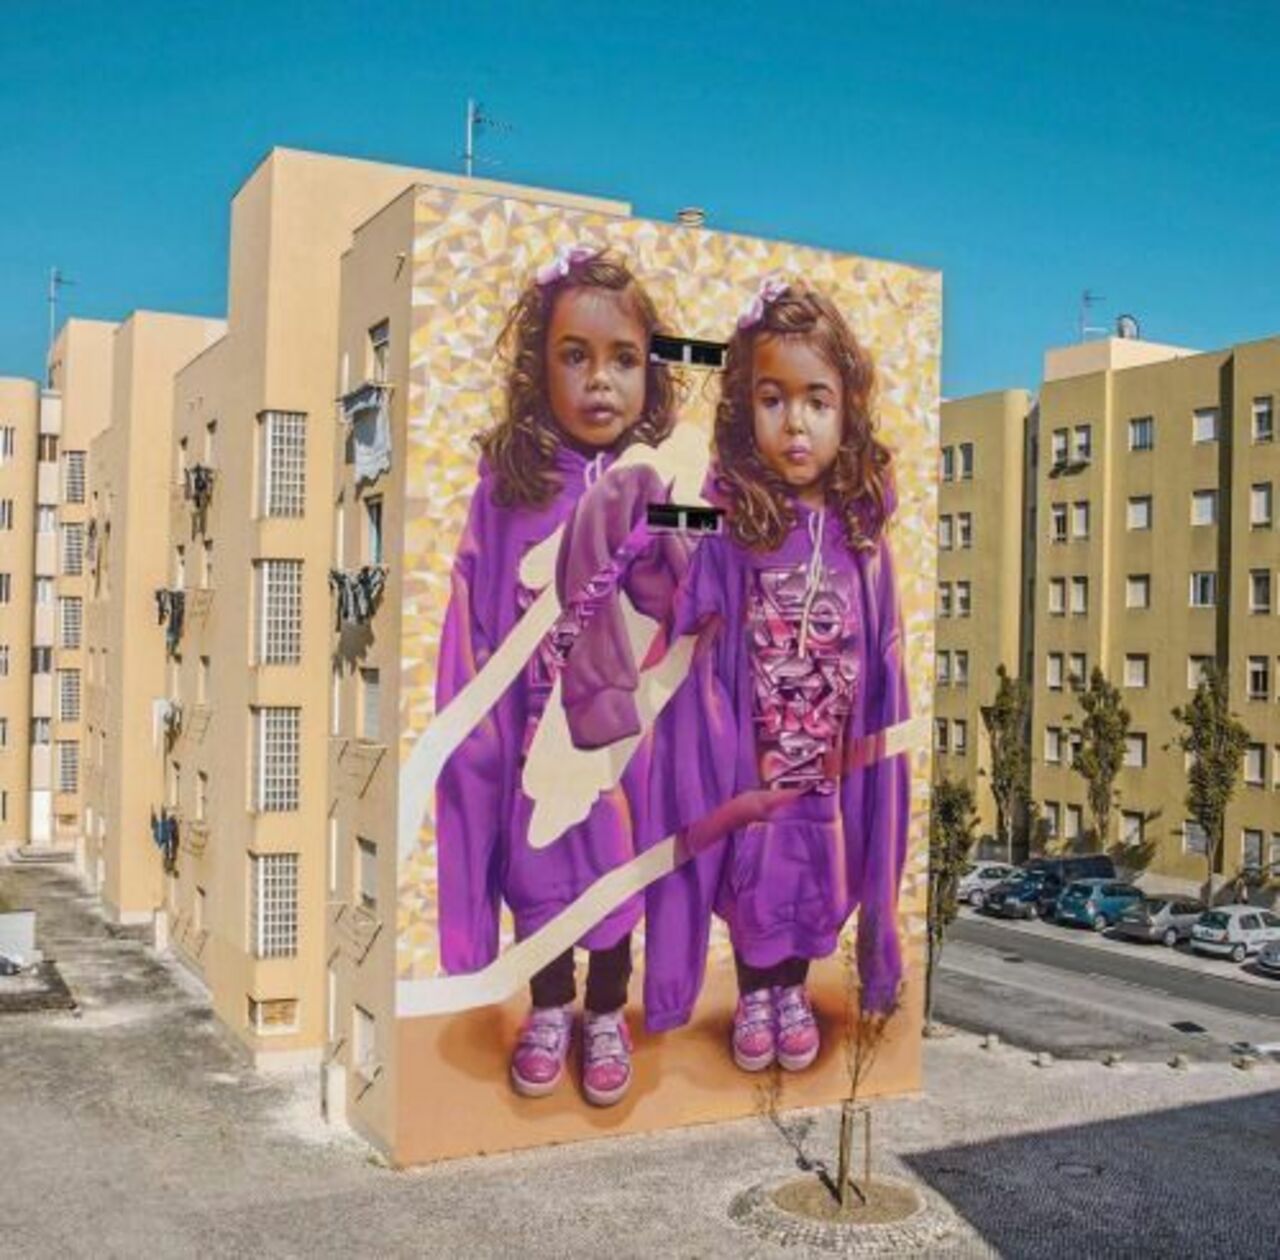 New work by TELMO MIEL and Pariz One for MURO festival in Lisbon. #mural #streetart #art #graffiti https://t.co/kCrG3JC0Uo